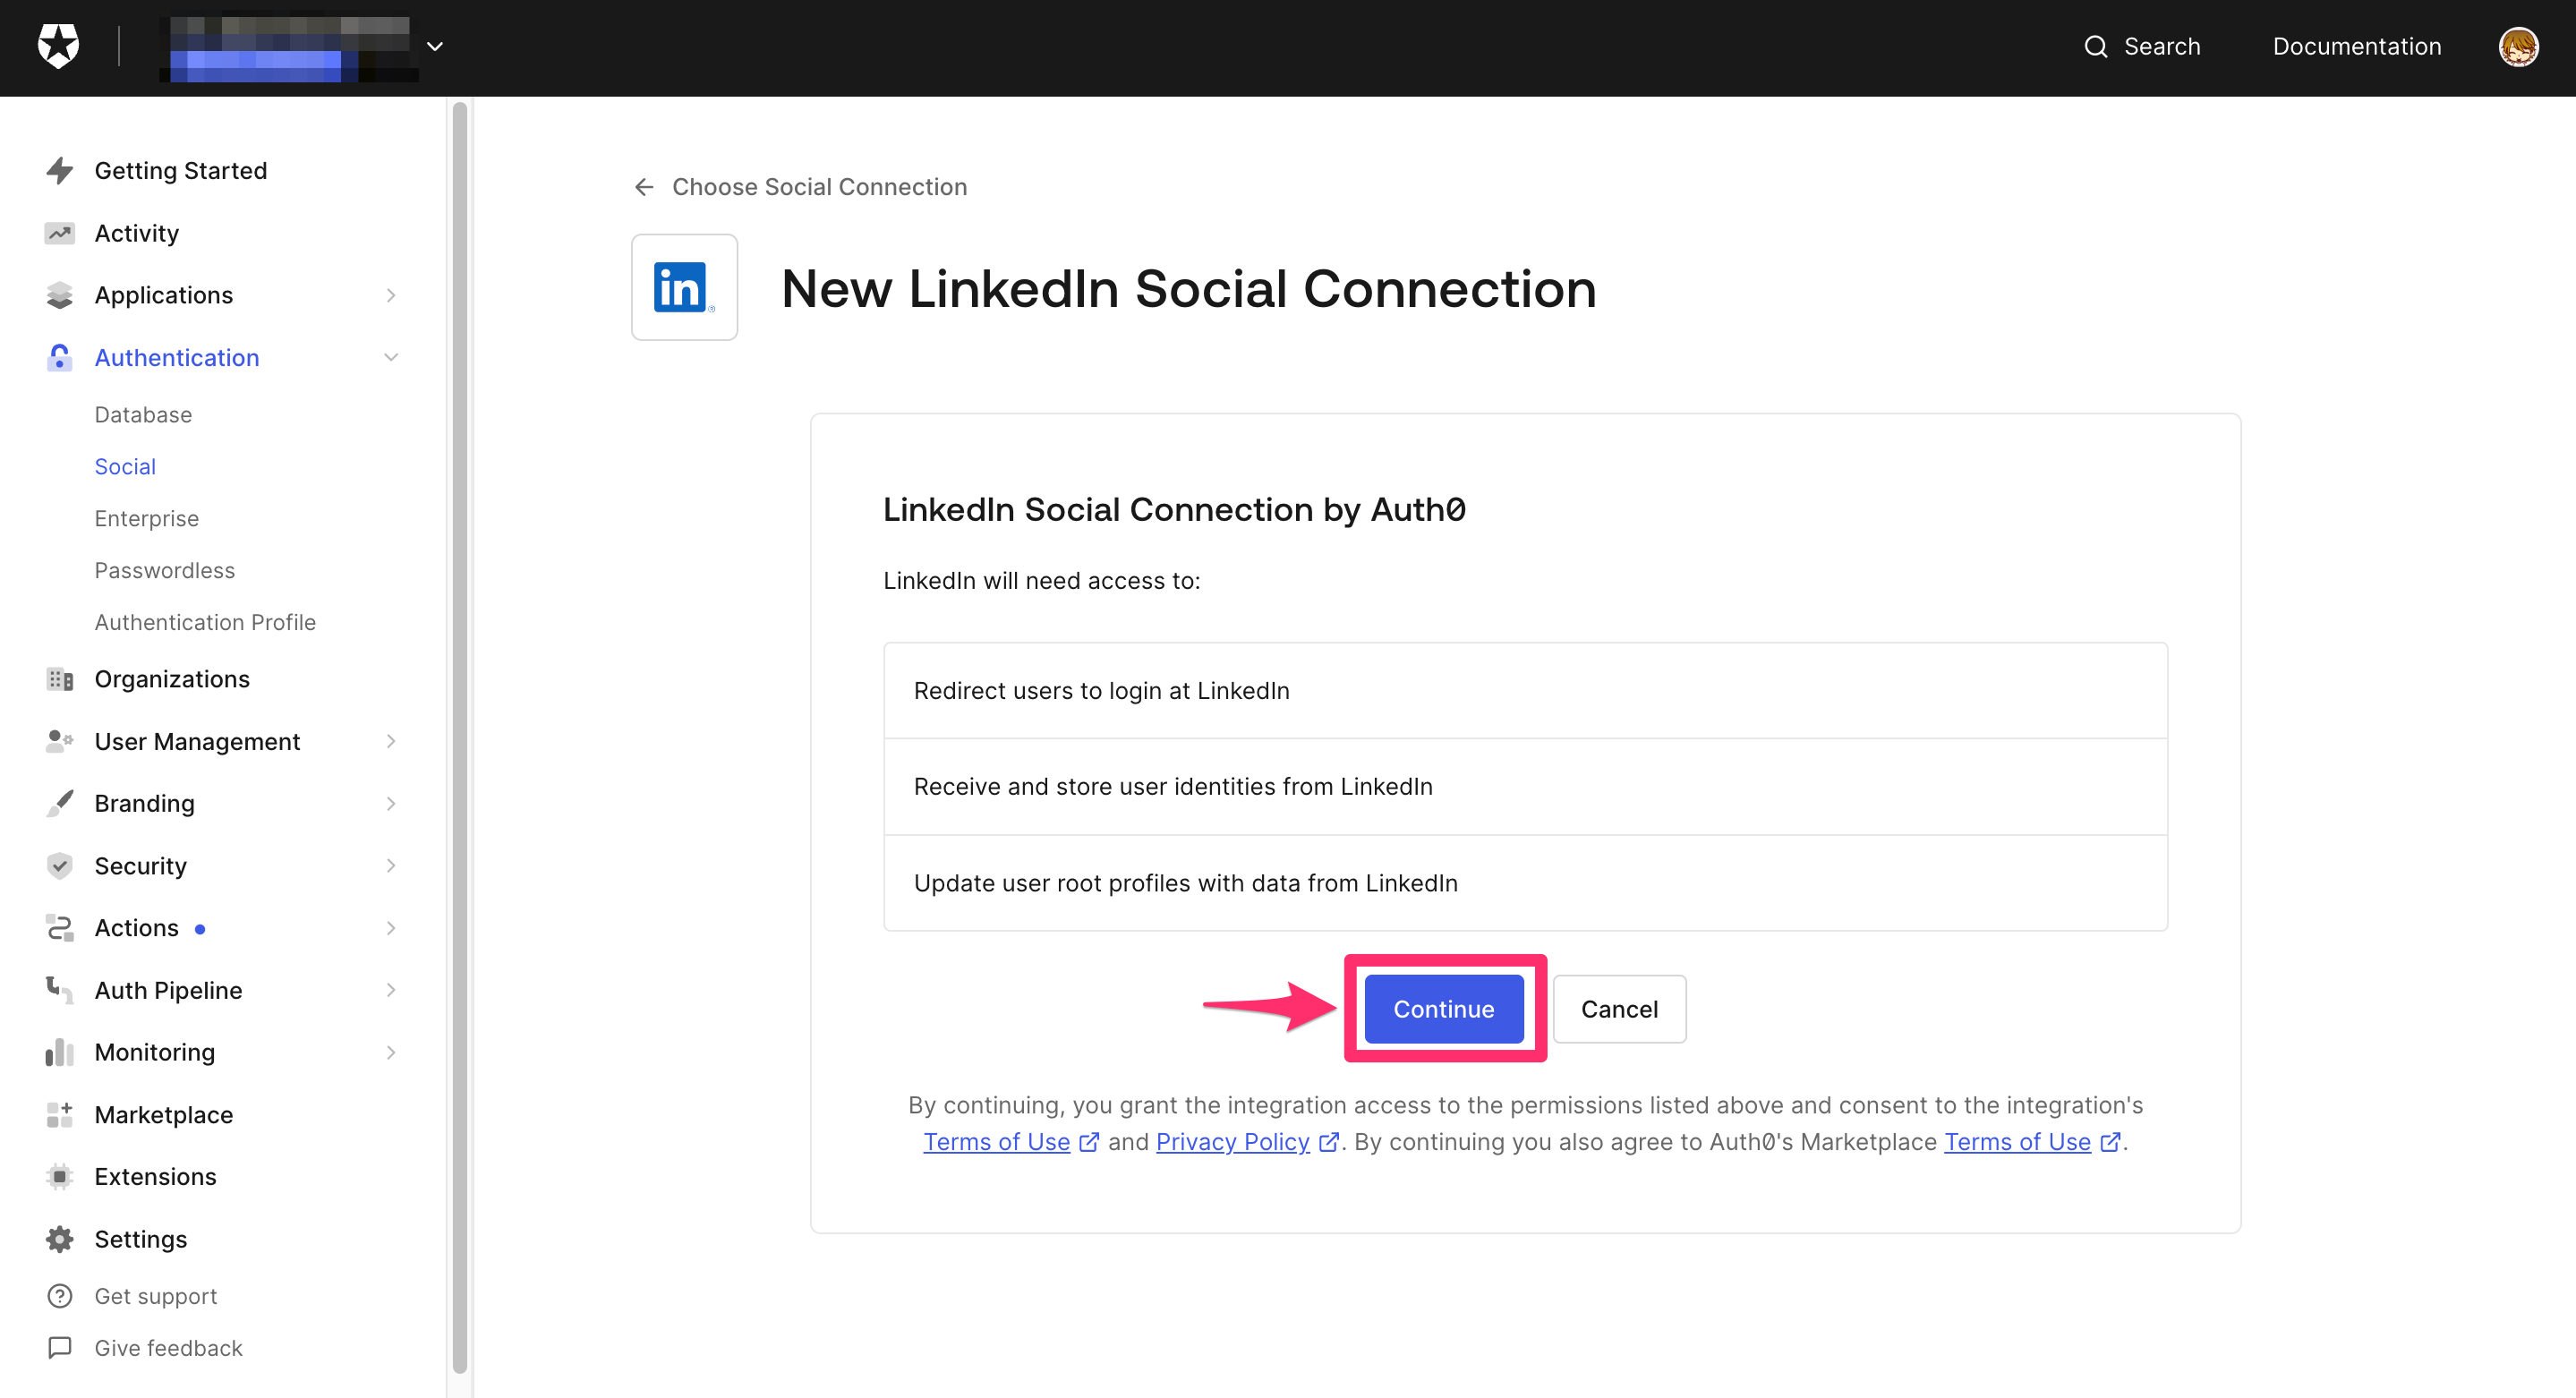 Okta-CIC-Social_Connections-LinkedIn